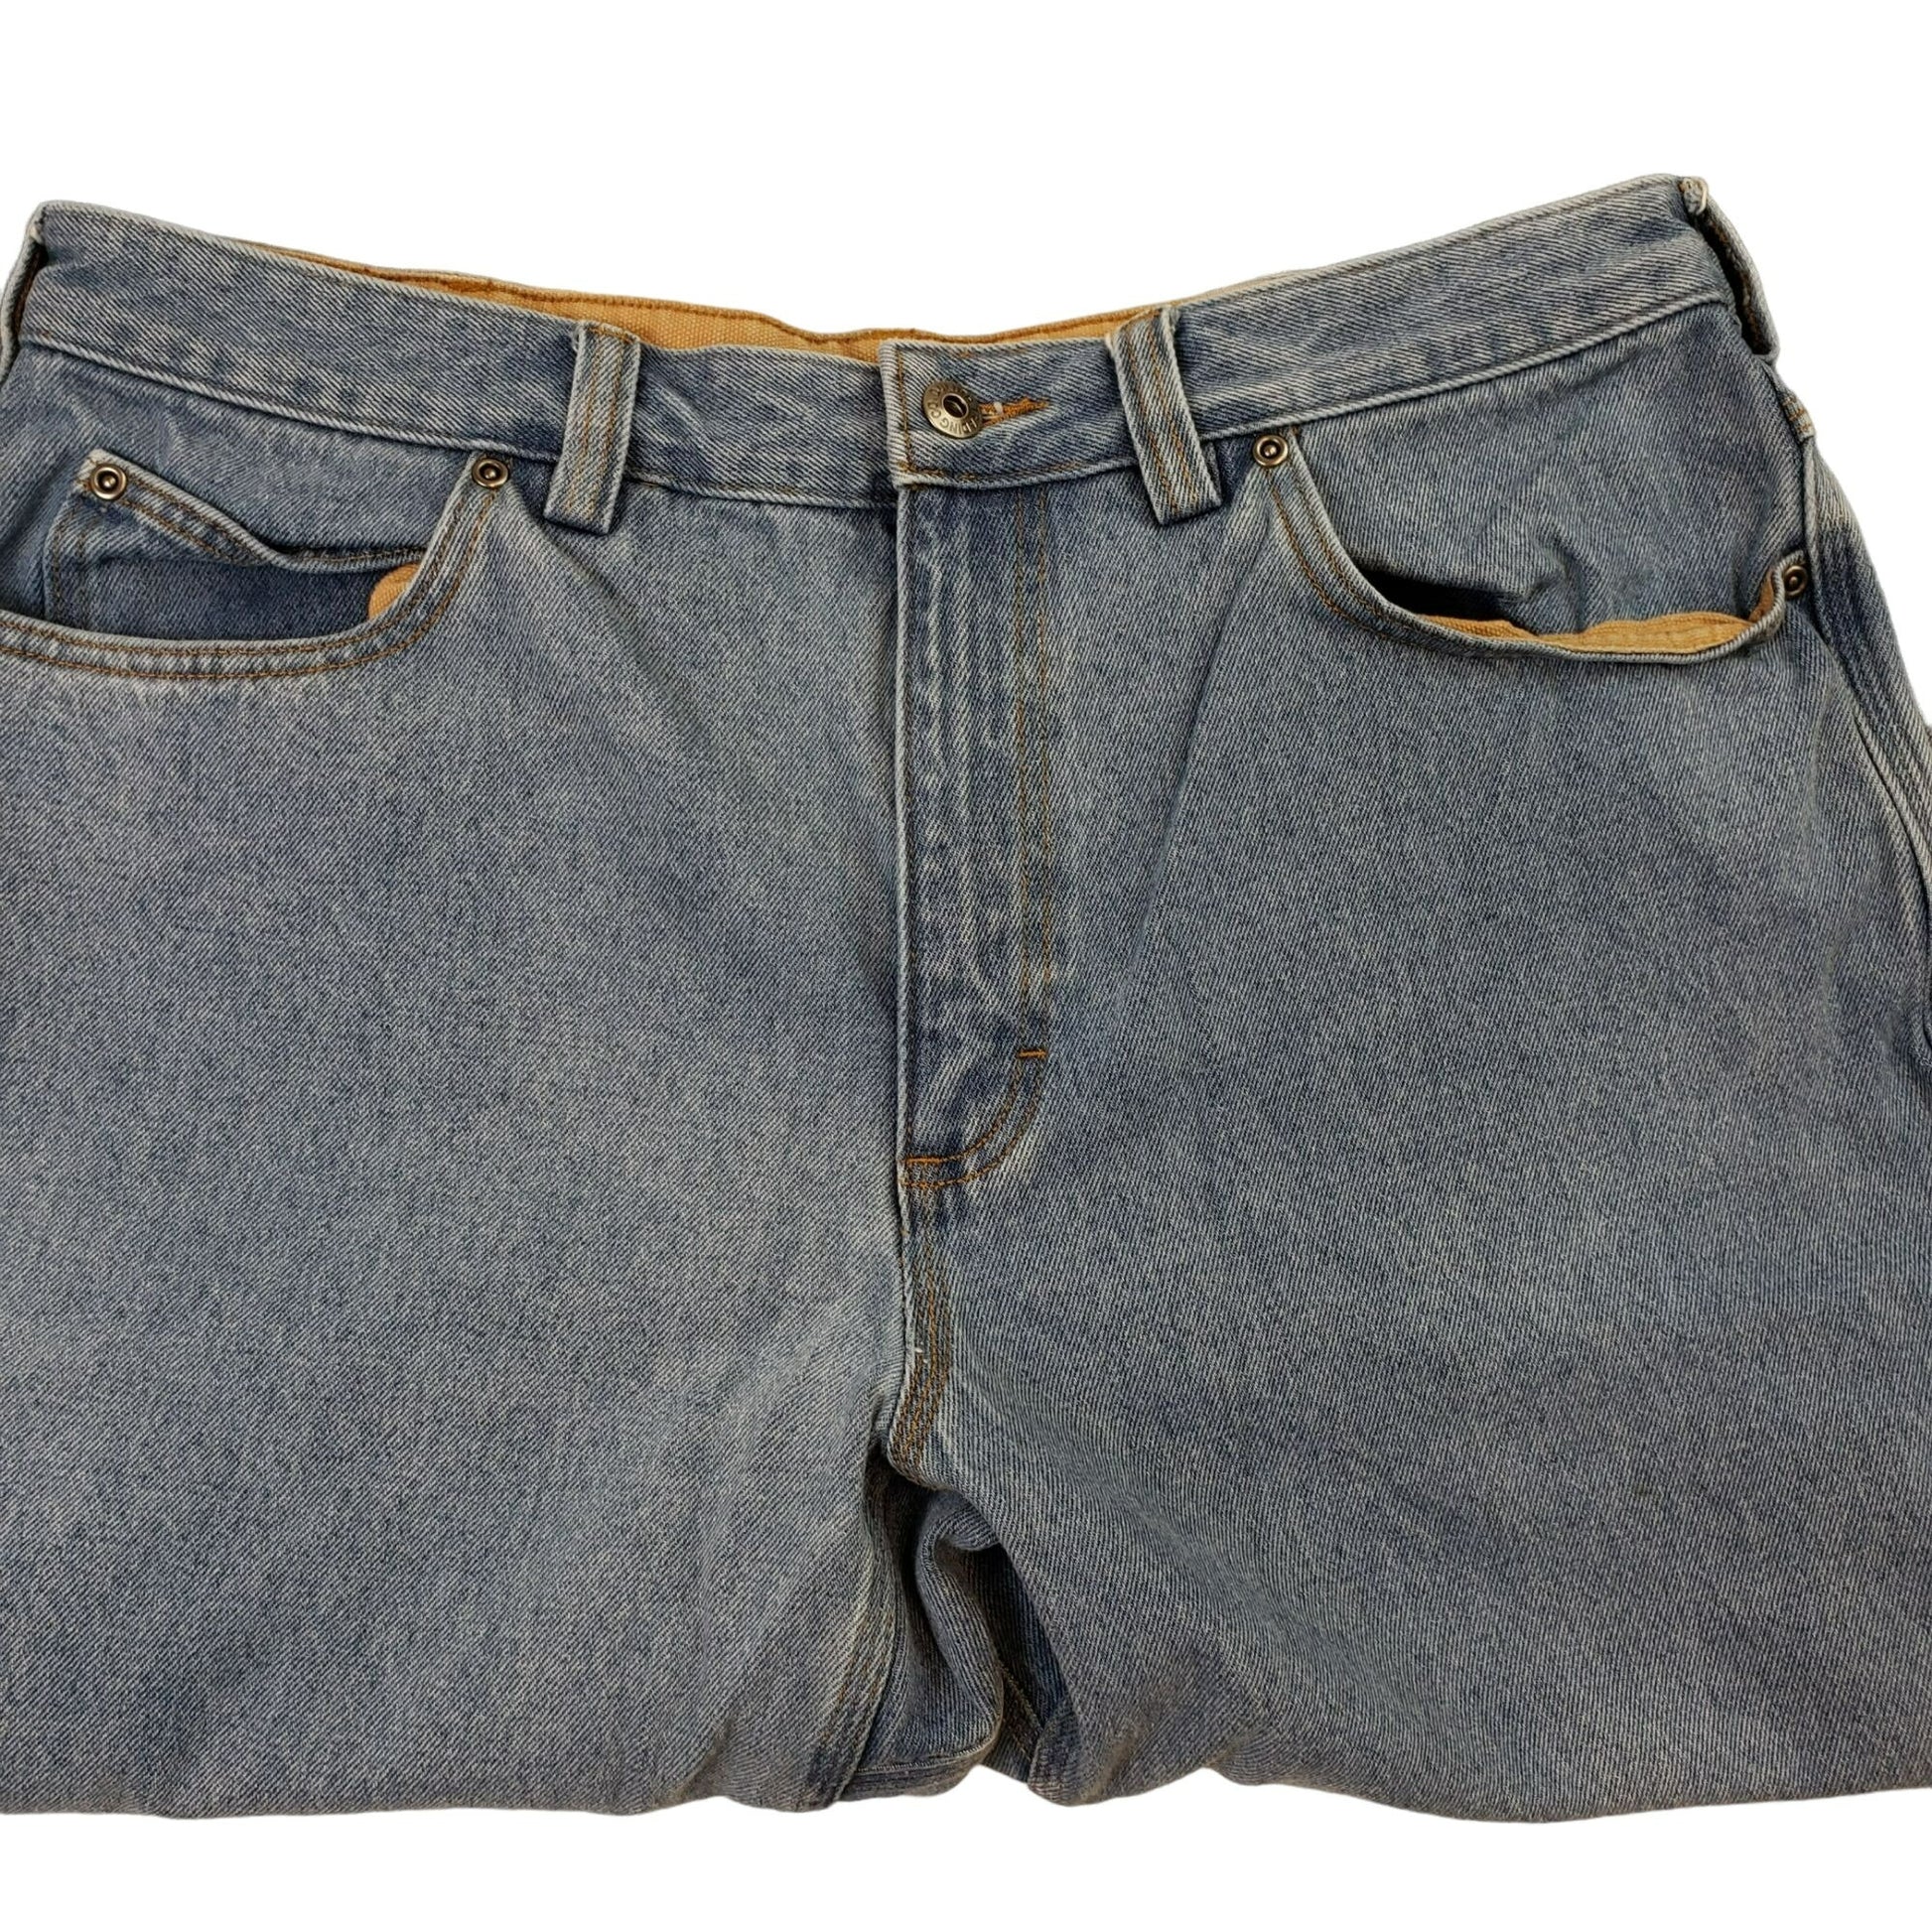 Duluth Trading Women's Blue Denim Medium Wash Straight Leg Jeans